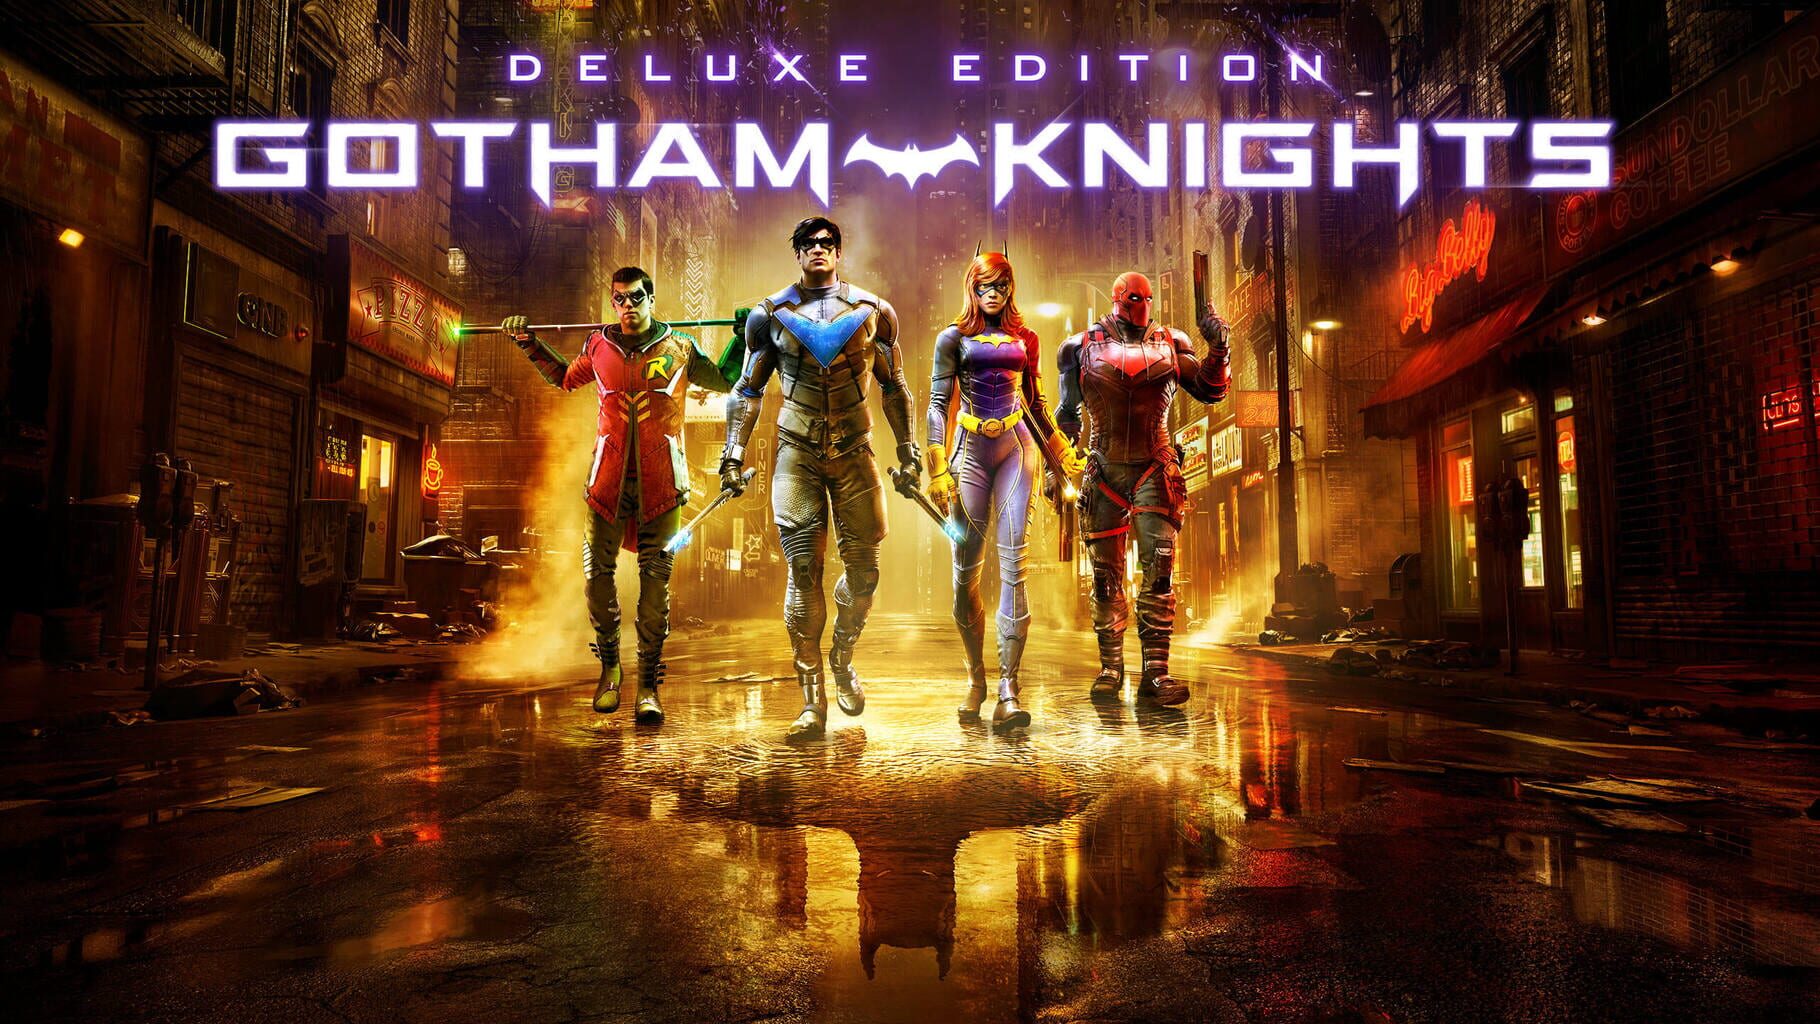 Arte - Gotham Knights: Deluxe Edition